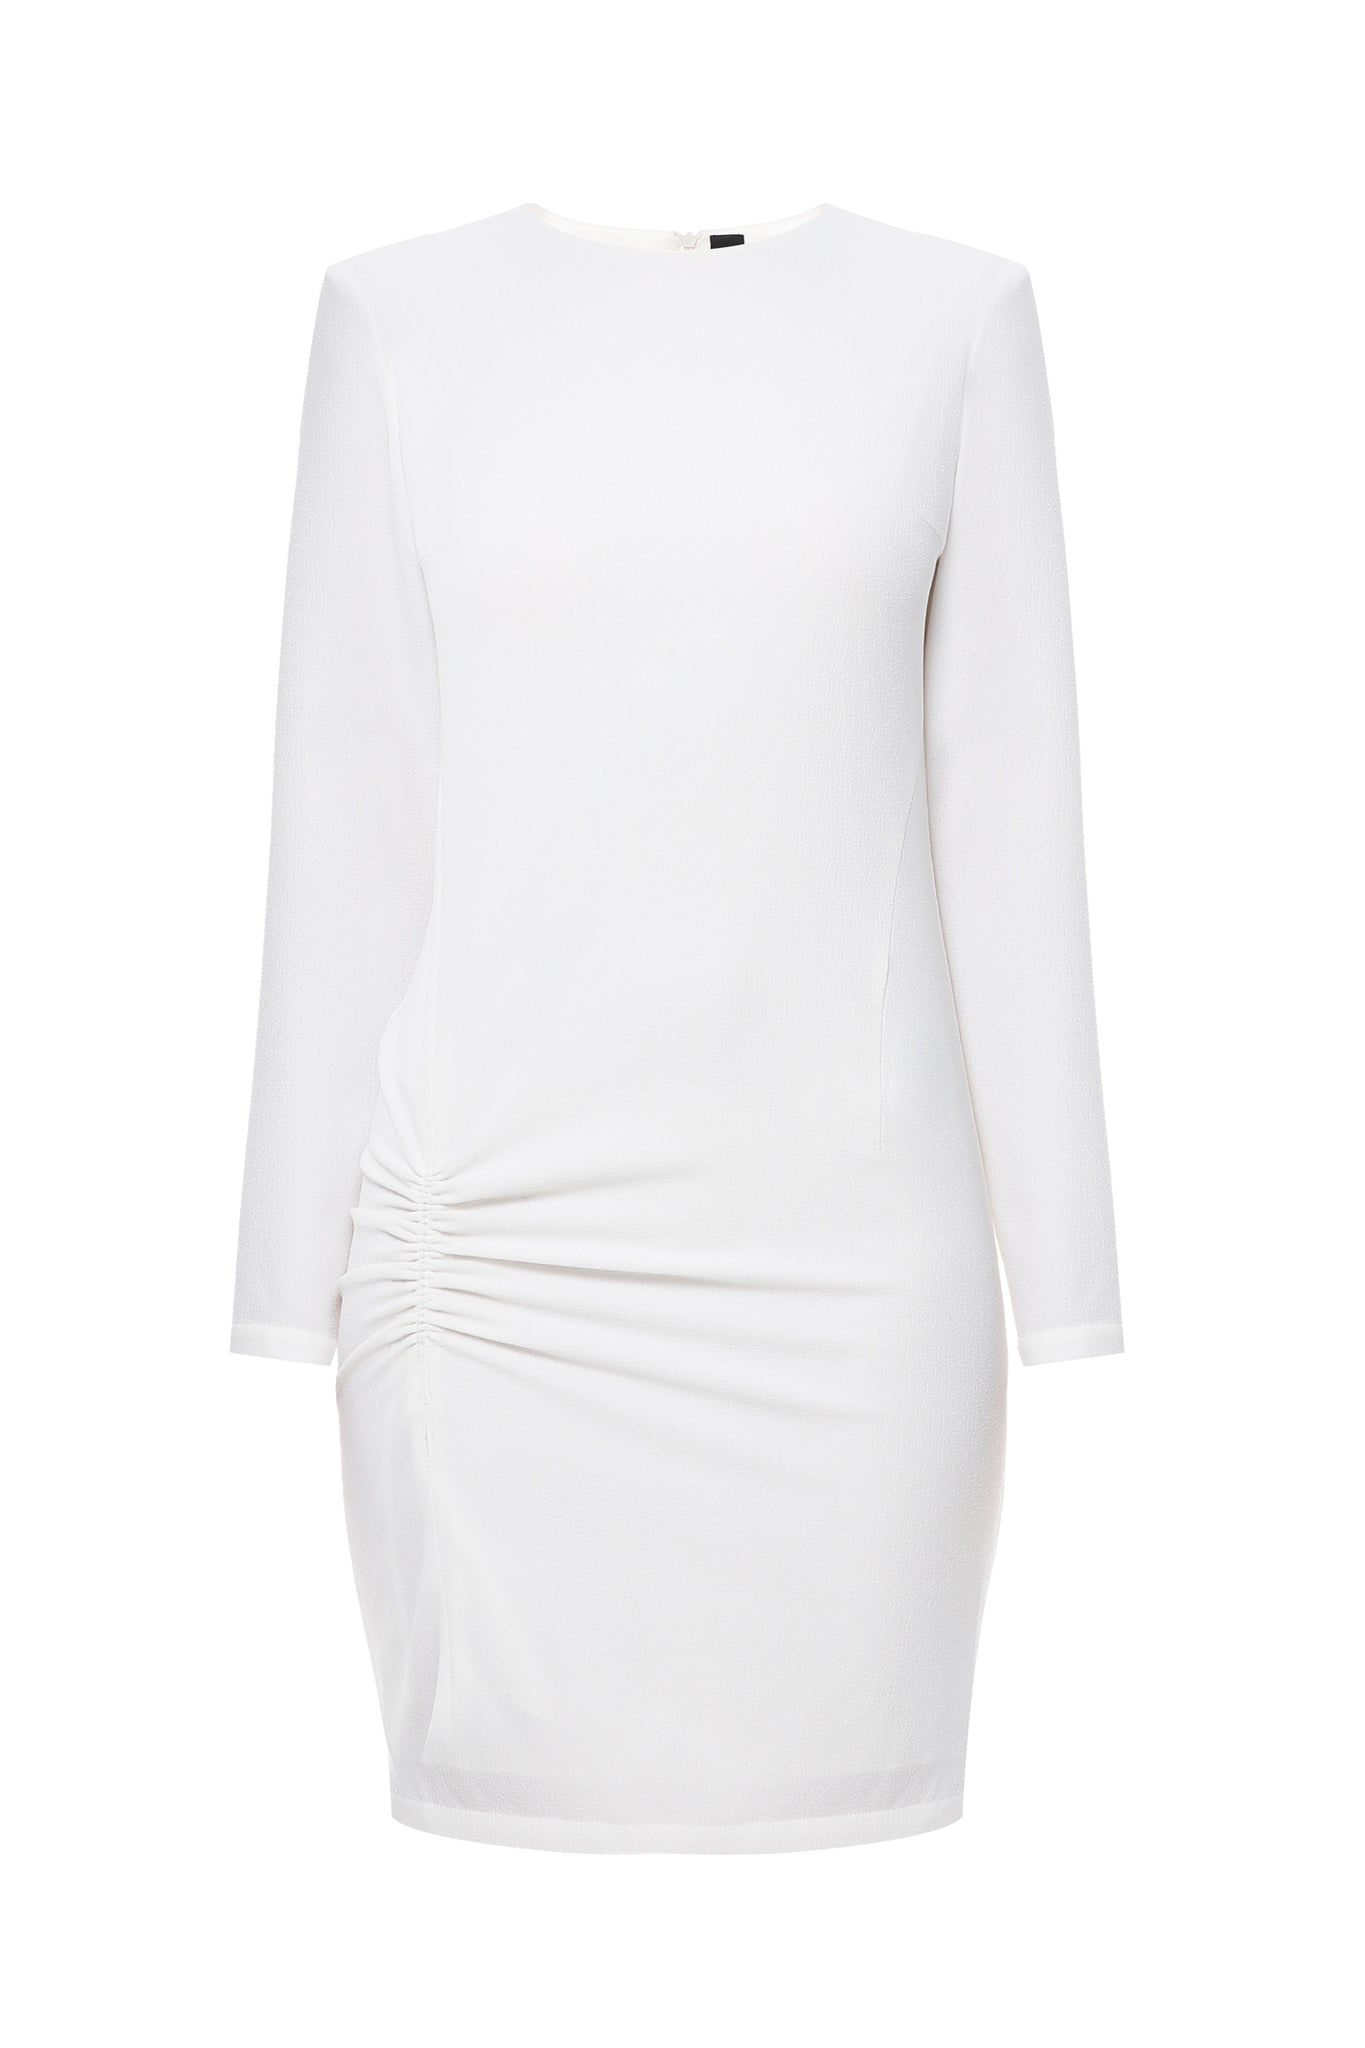 Біла сукня міні з драпіруванням